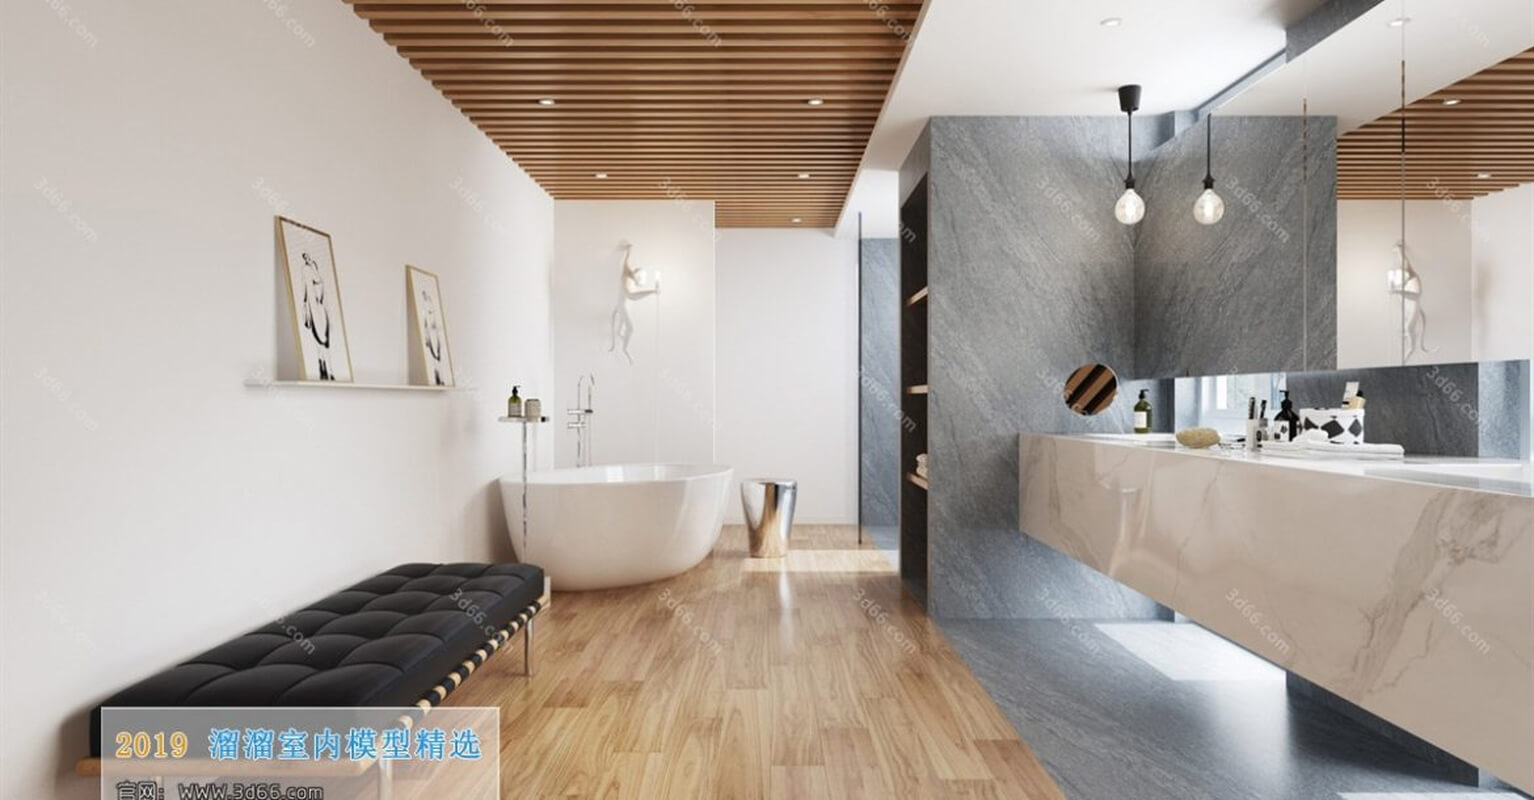 3D66 Toilet & Bathroom Interior 2019 Style (06)